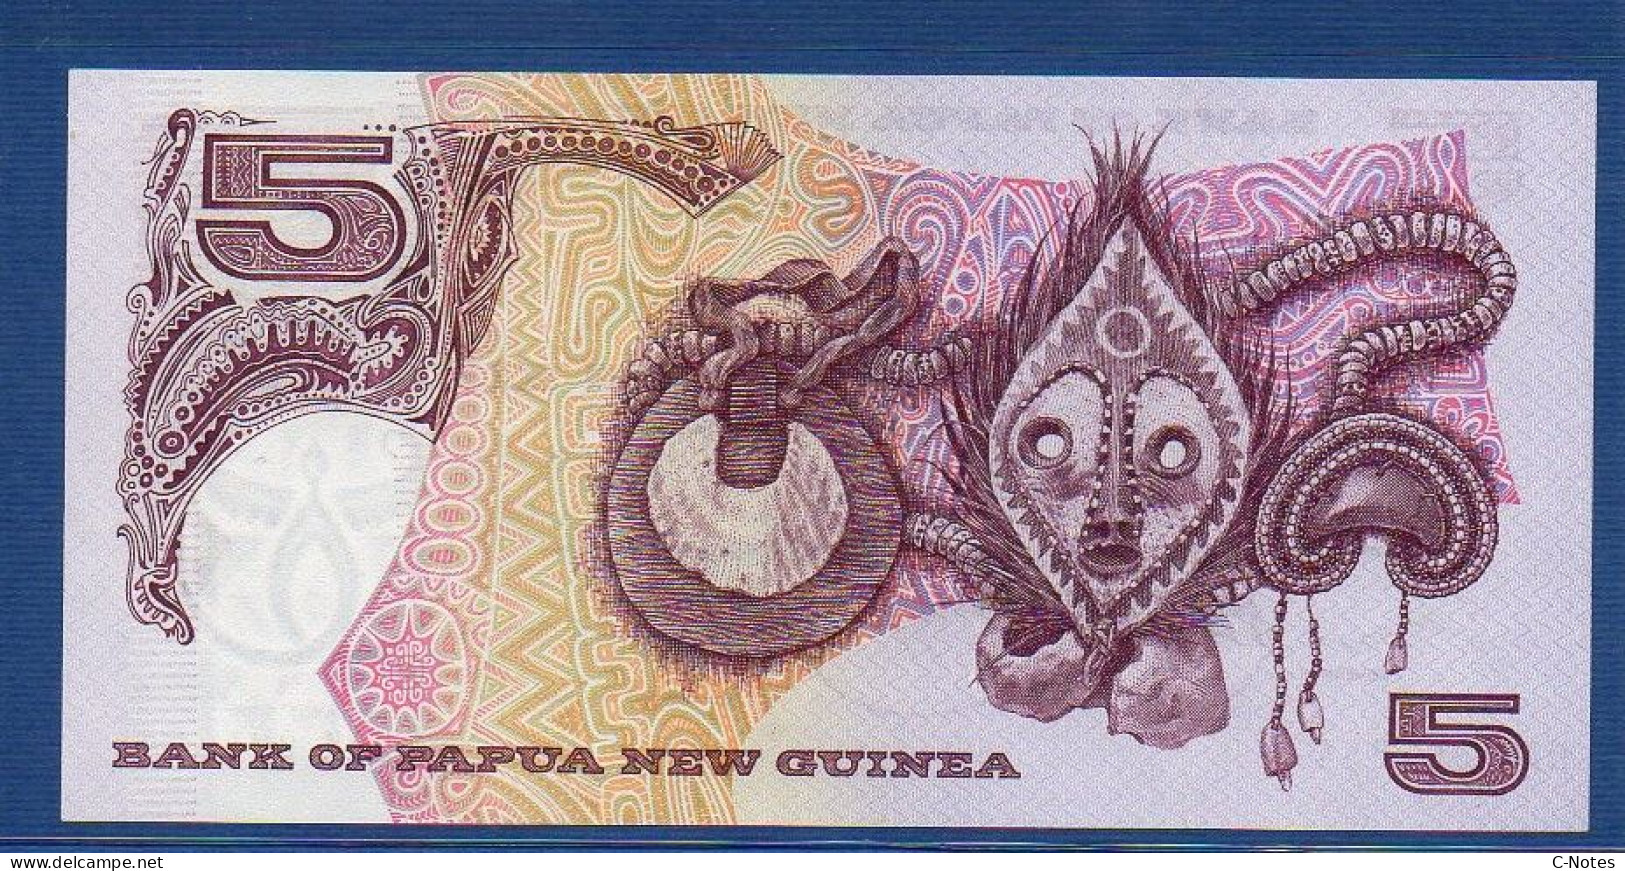 PAPUA NEW GUINEA - P. 6a – 5 KINA ND (1981-1987) UNC, S/n HAK 004854 - Papoea-Nieuw-Guinea